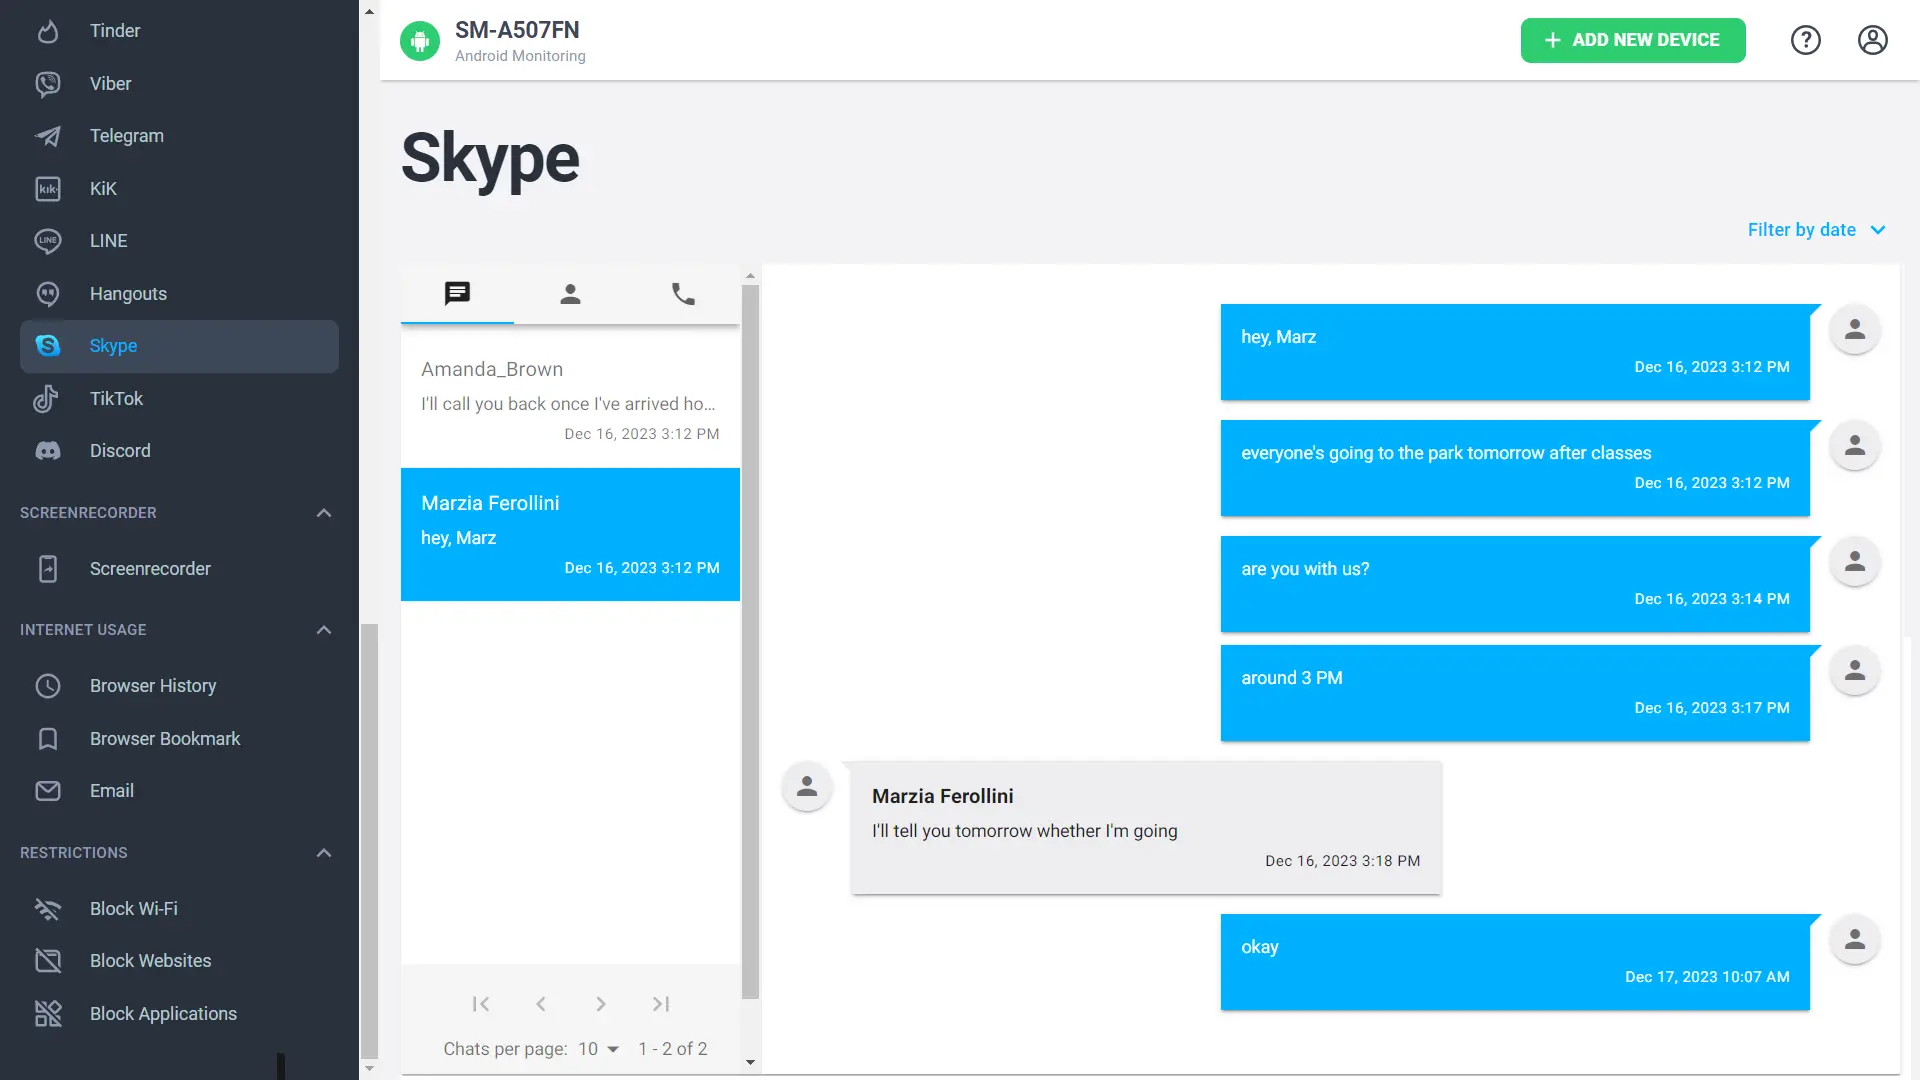 mSpy Skype monitoring